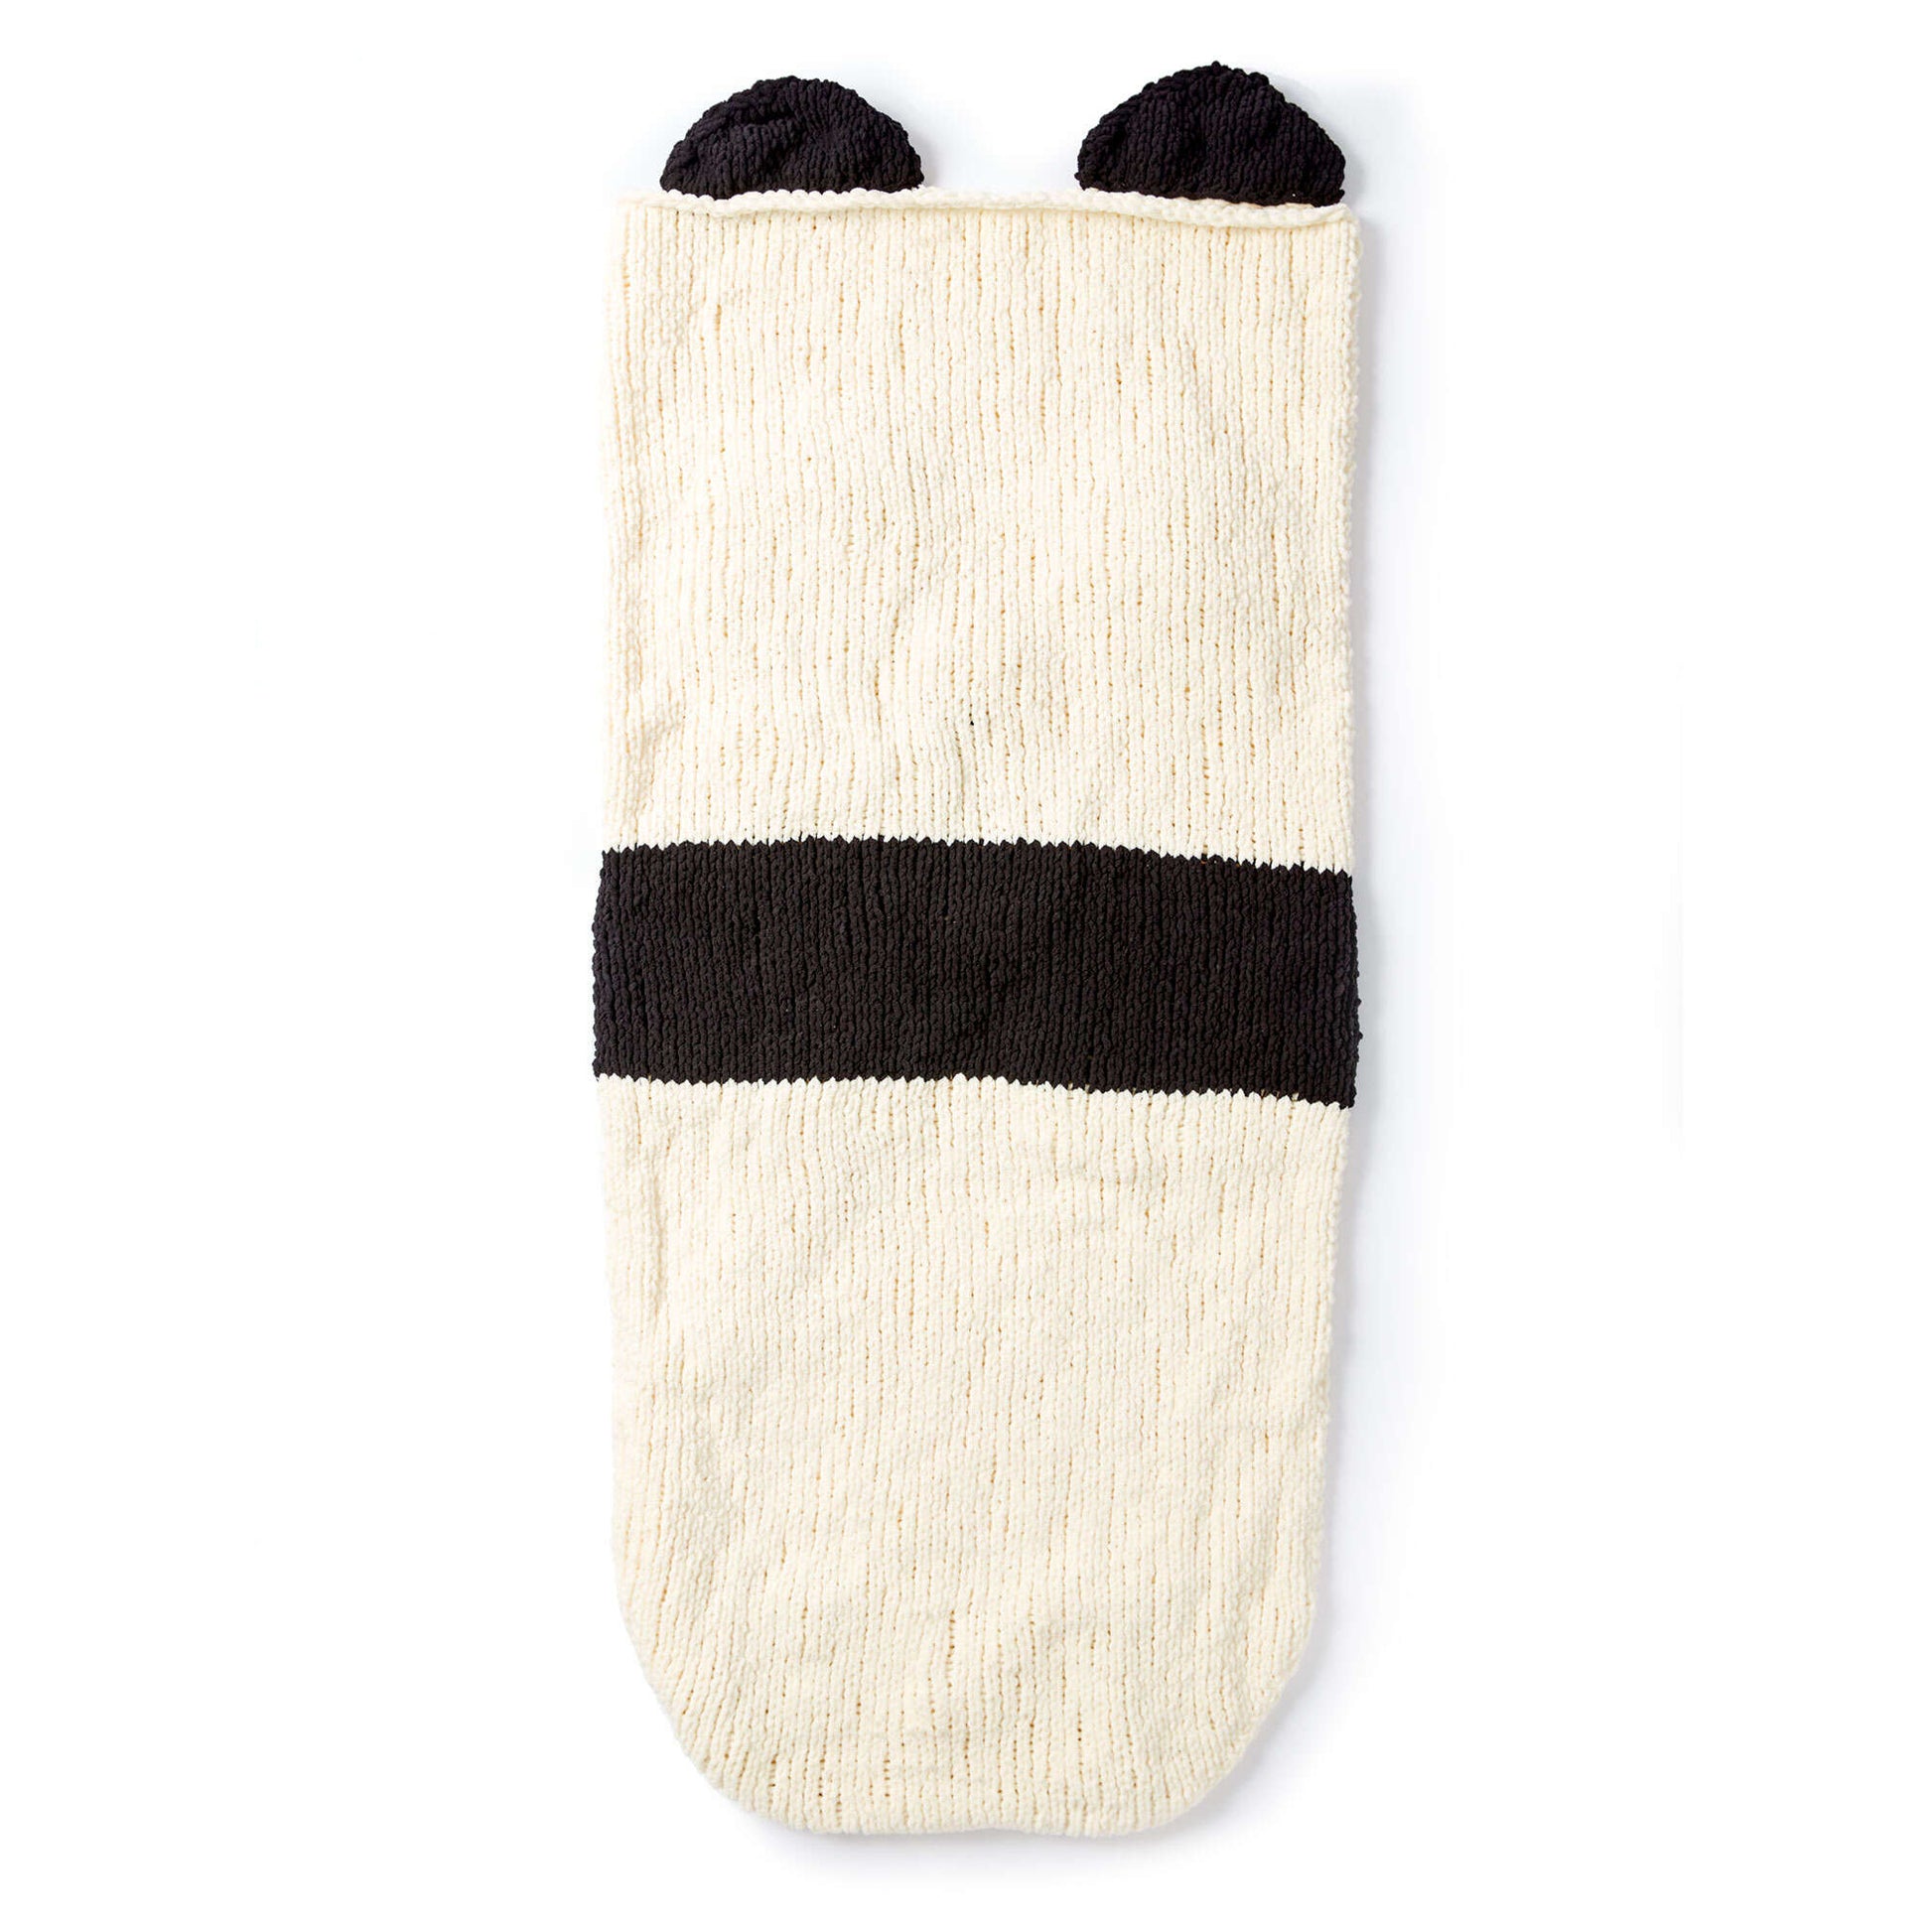 Free Bernat Knit Panda Bear Snuggle Sack Pattern